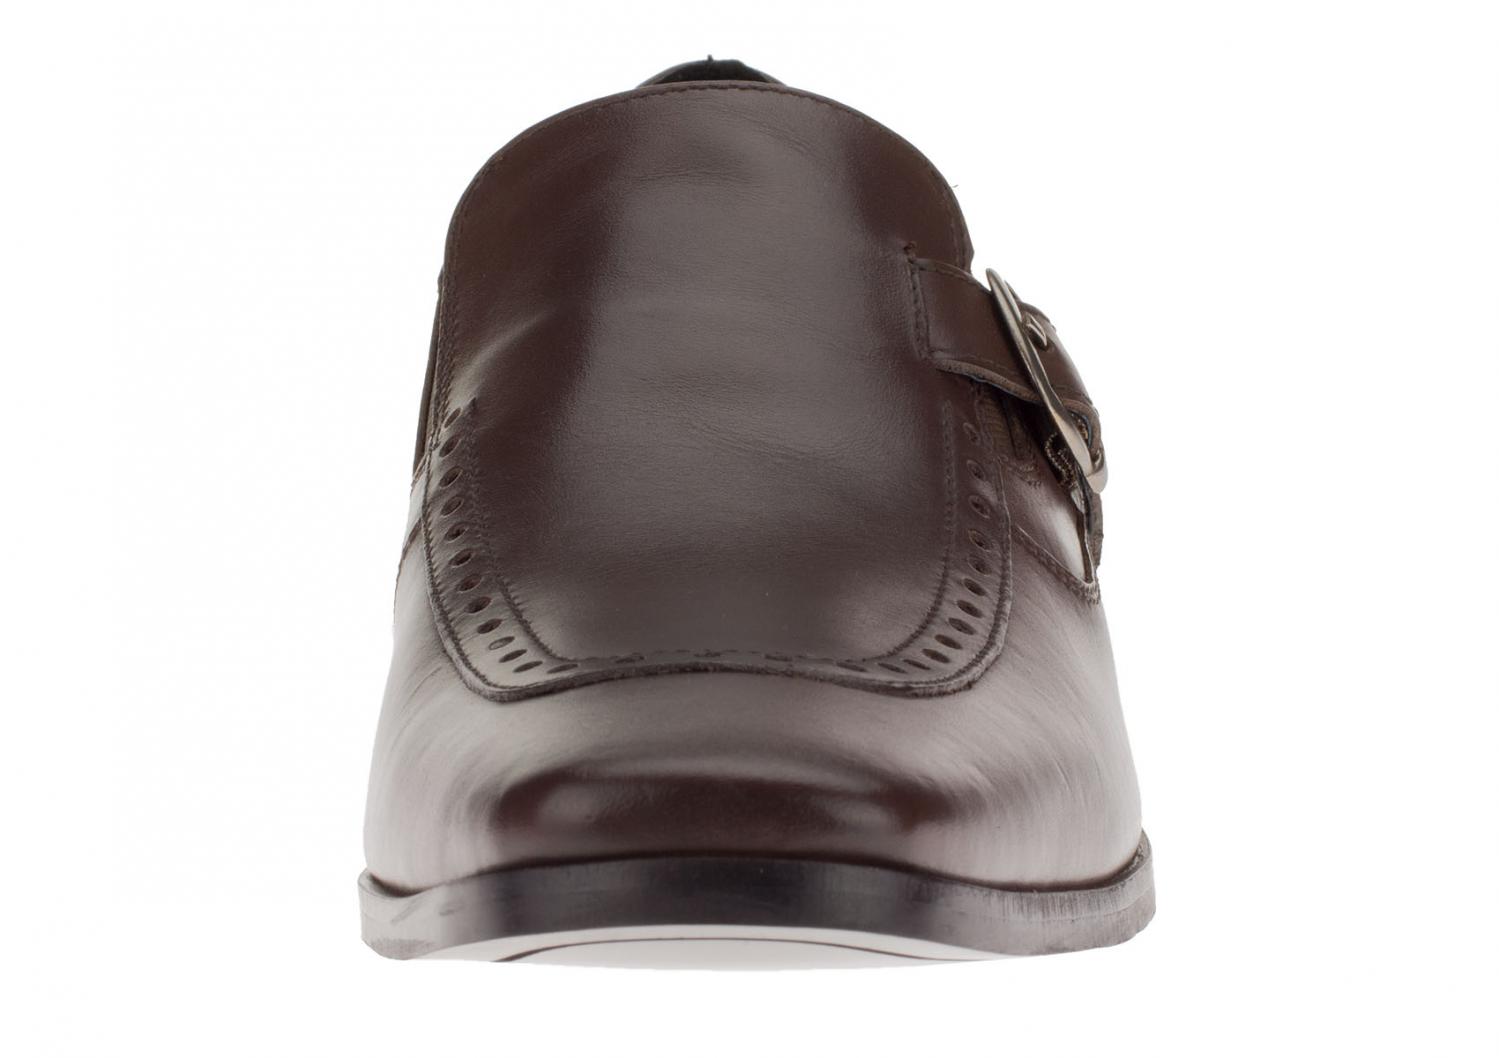 DTI GV Executive Men's Leather Dress Shoe Celio Slip-On Loafer Brown - image 2 of 7